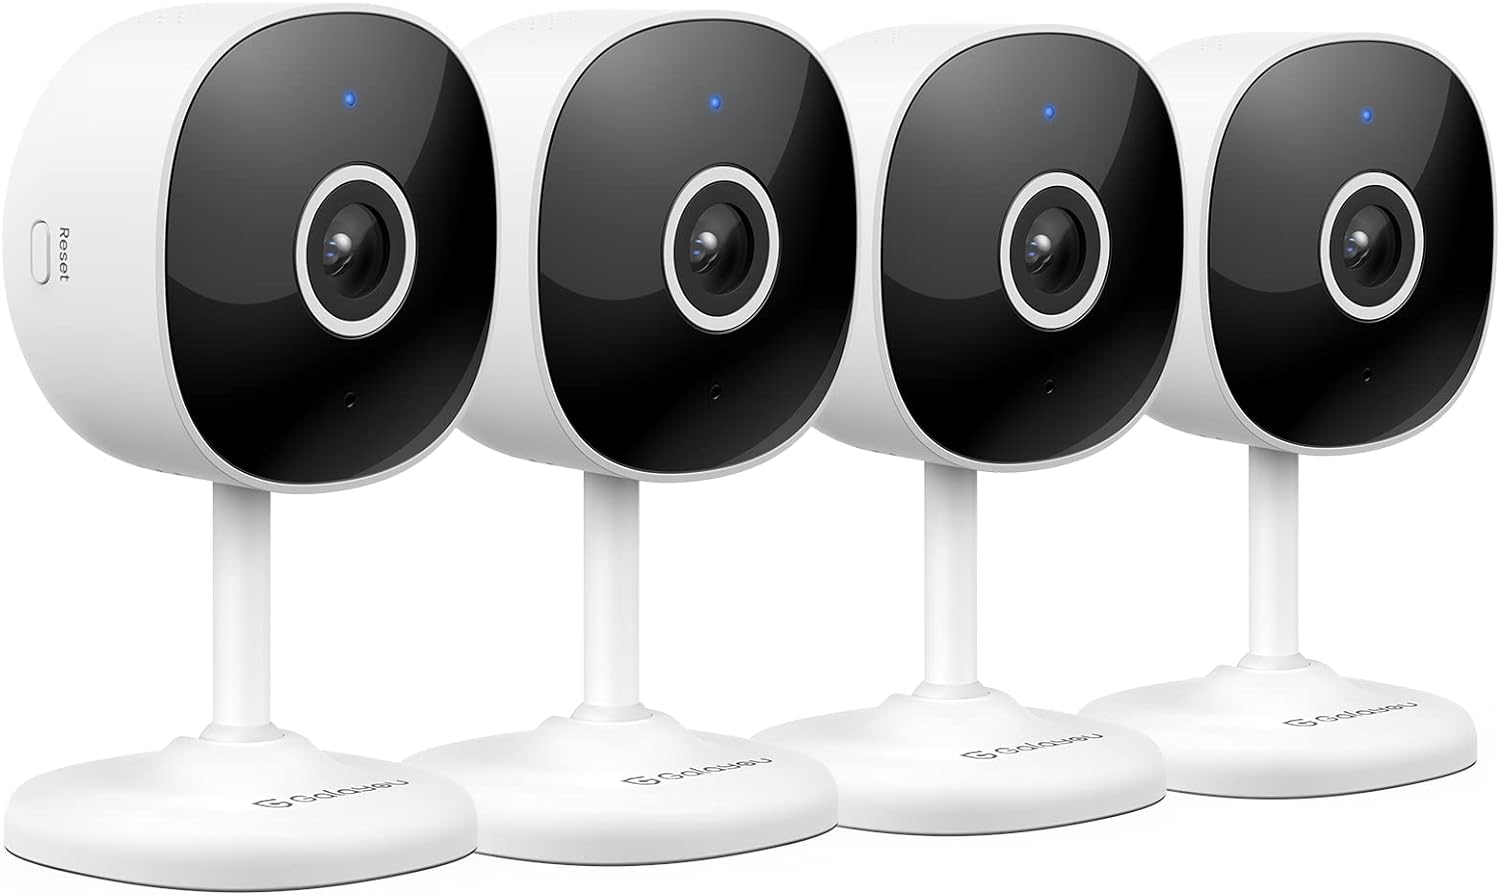 GALAYOU 2K Security Cameras Outdoor, WiFi Home Video Surveillance